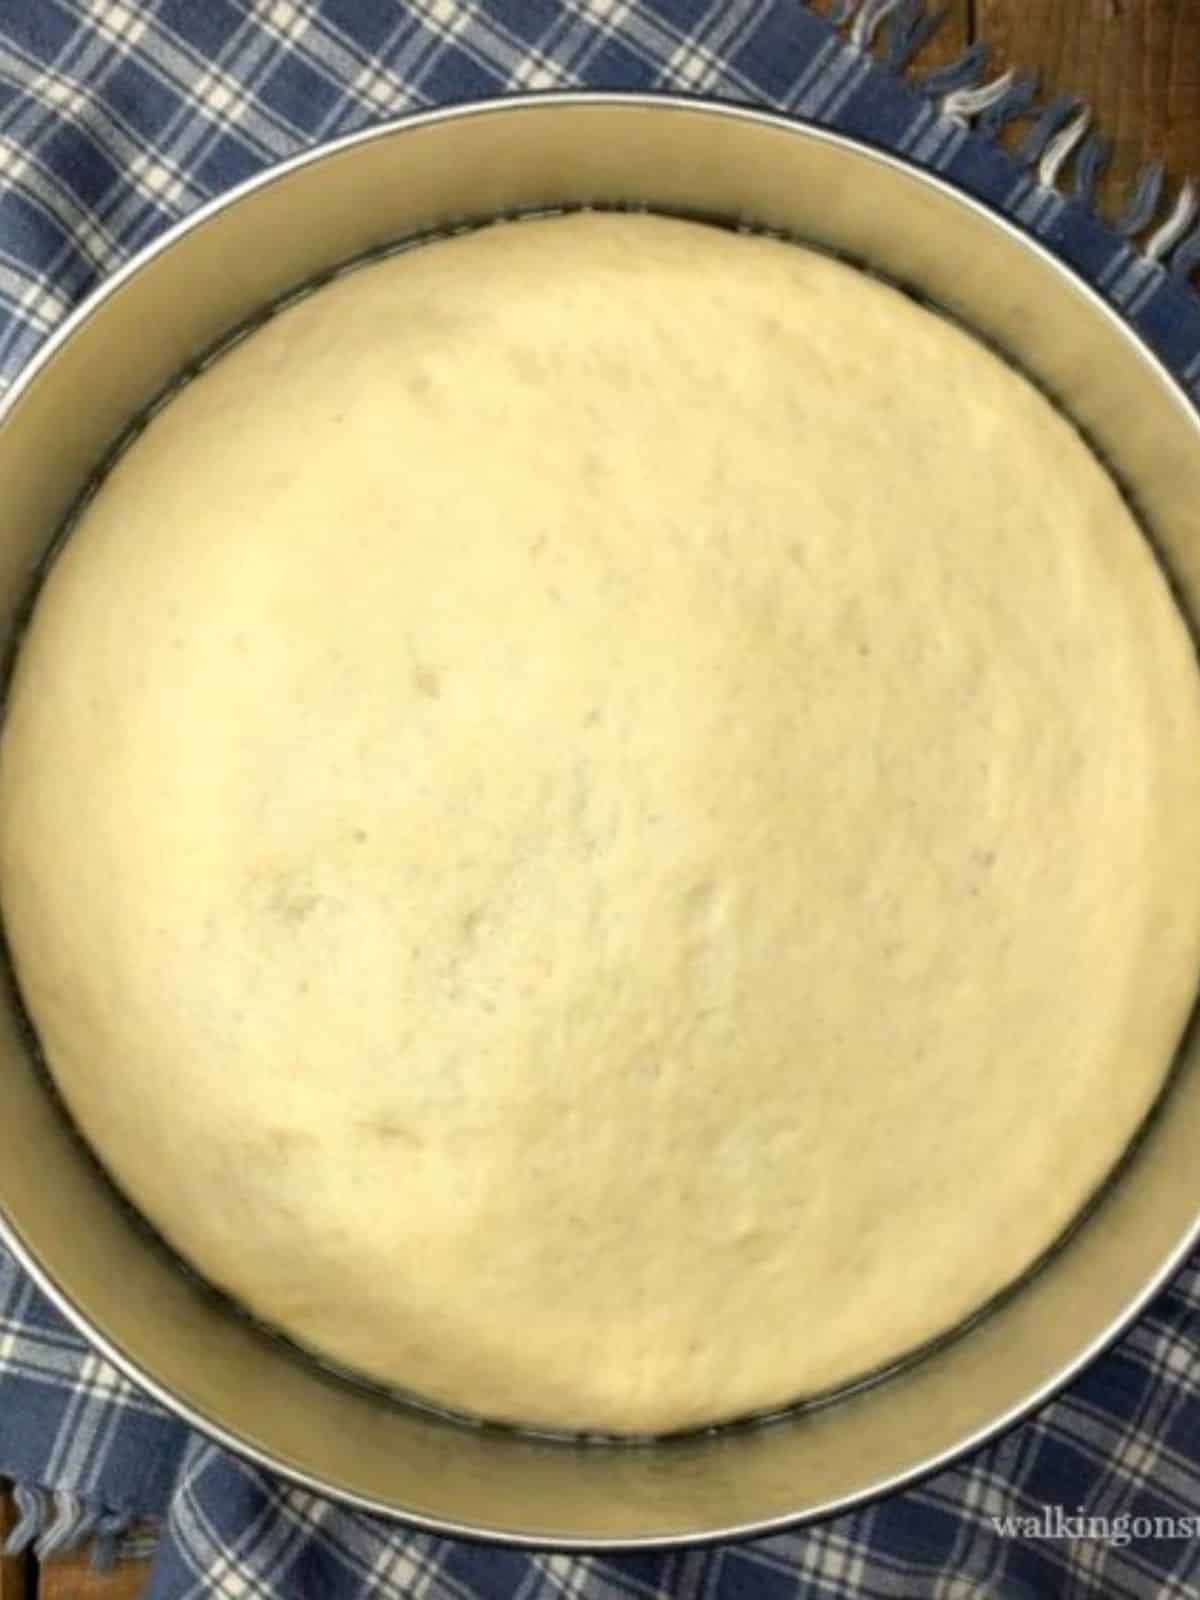 risen pizza dough in metal bowl on blue plaid napkin.